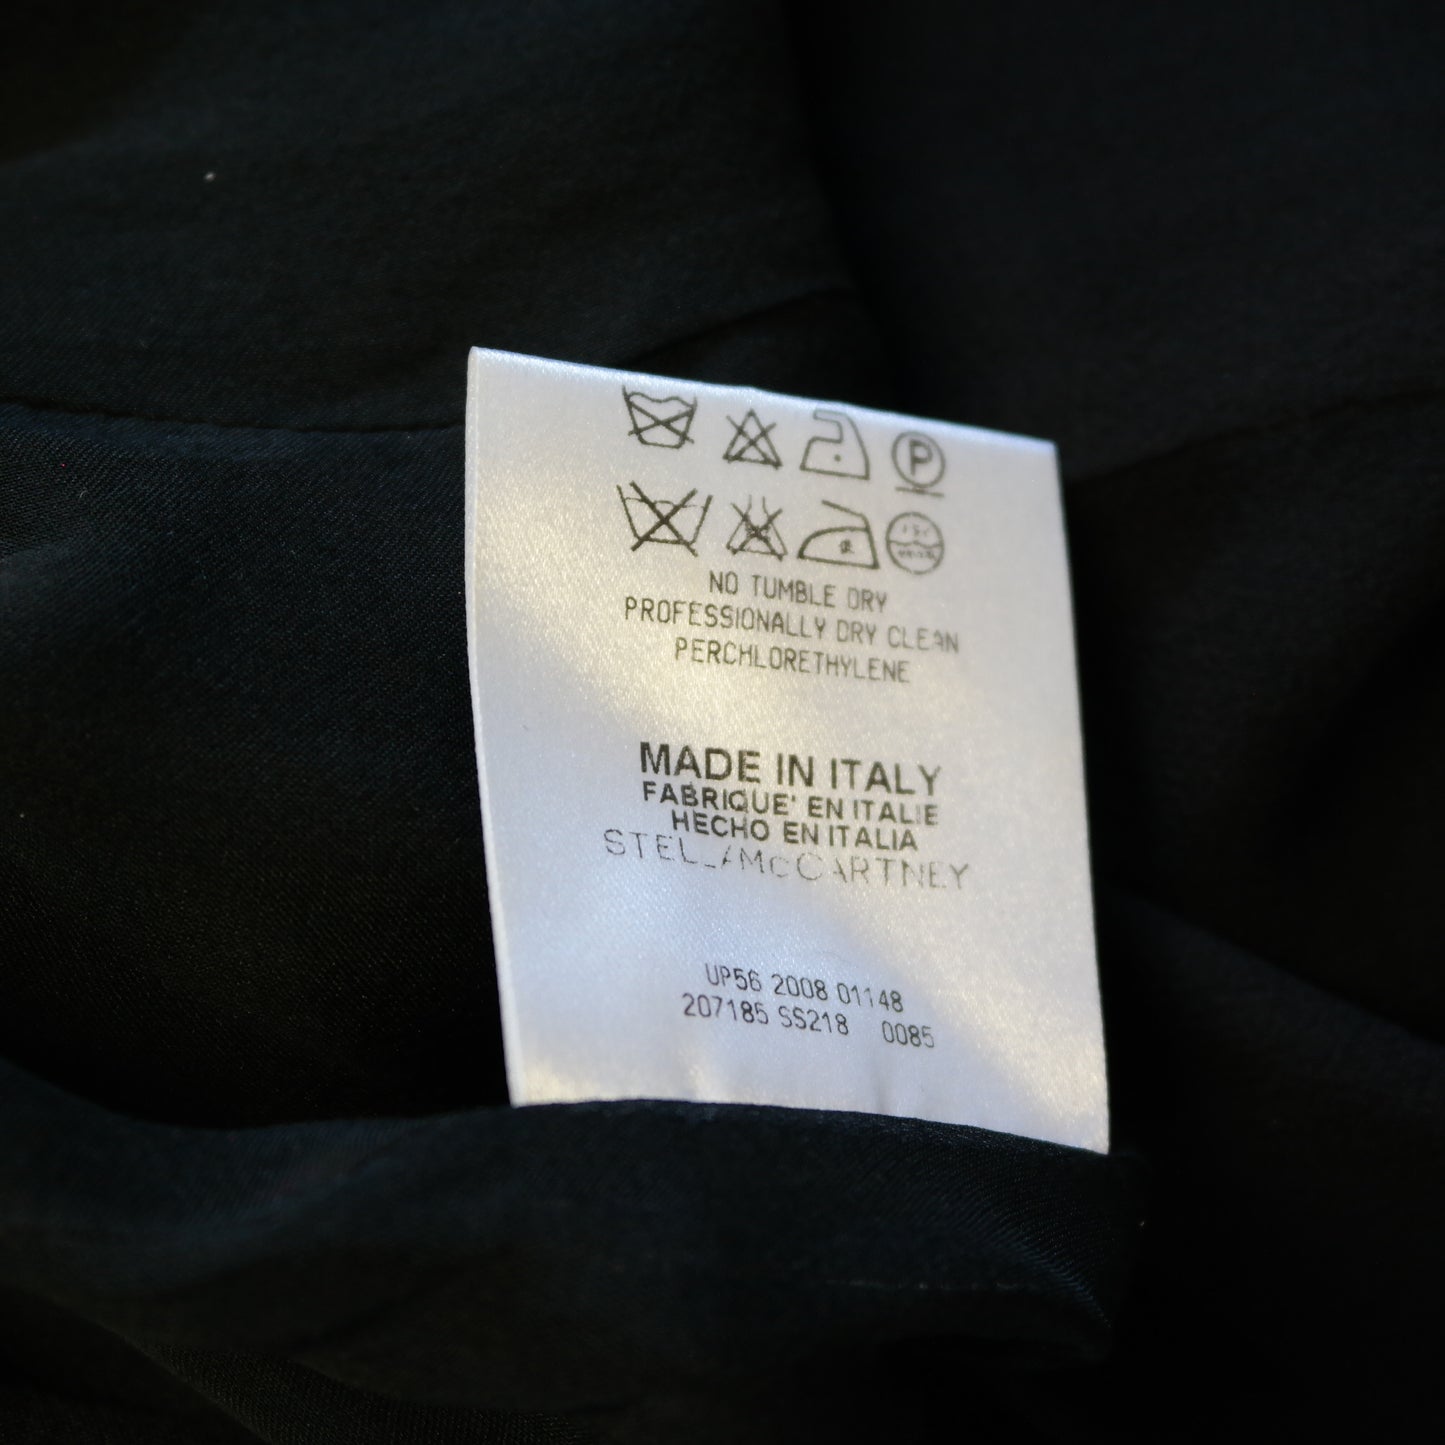 STELLA MCCARTNEY BLACK SHIFT DRESS - SIZE 36 uk 8 best fit